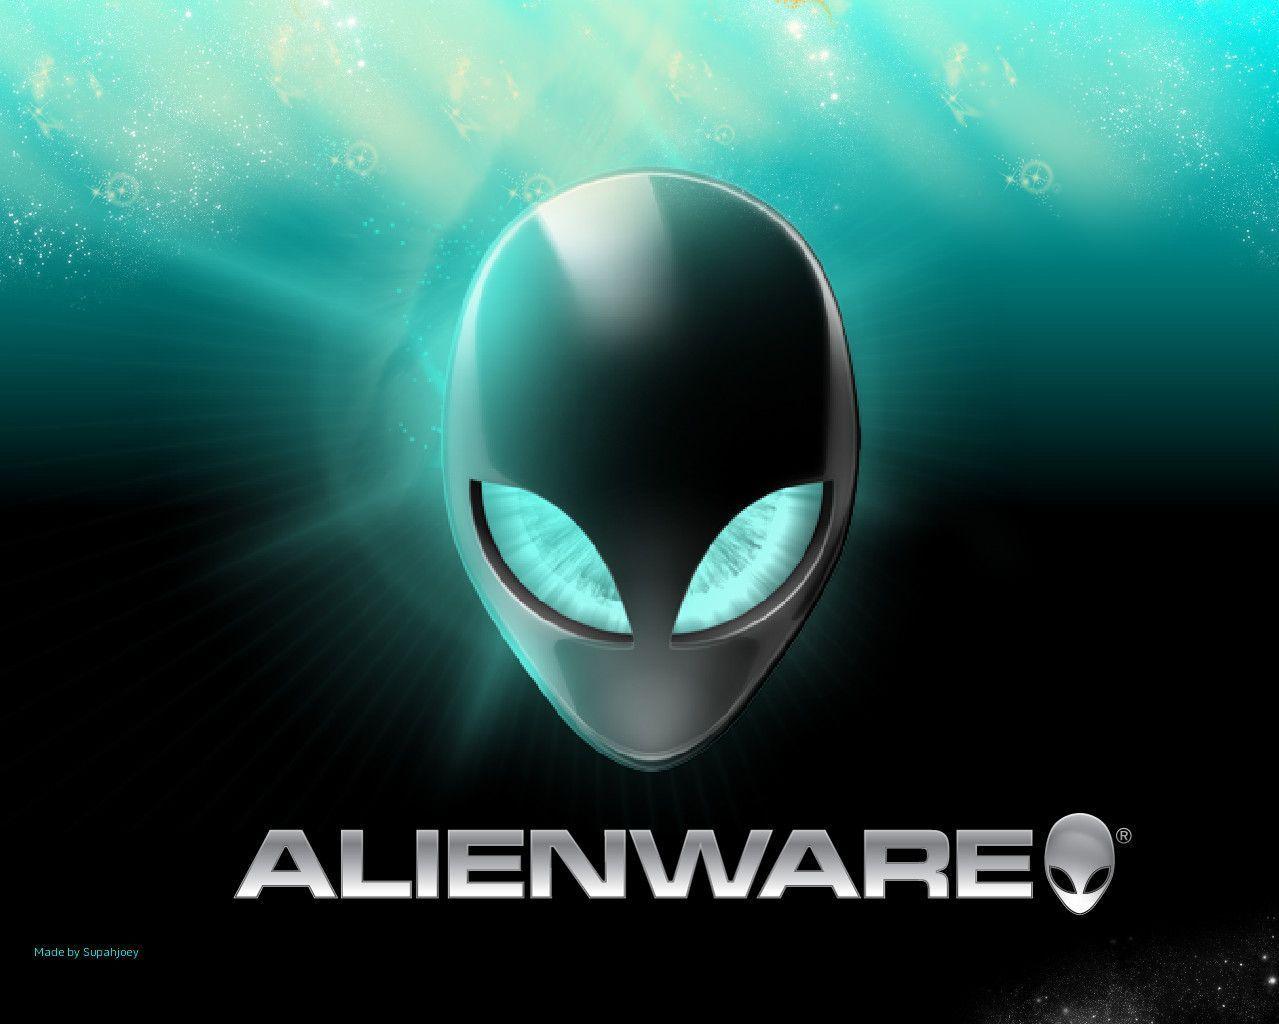 Alienware Theme For Windows 7 Wallpaper. PicsWallpaper